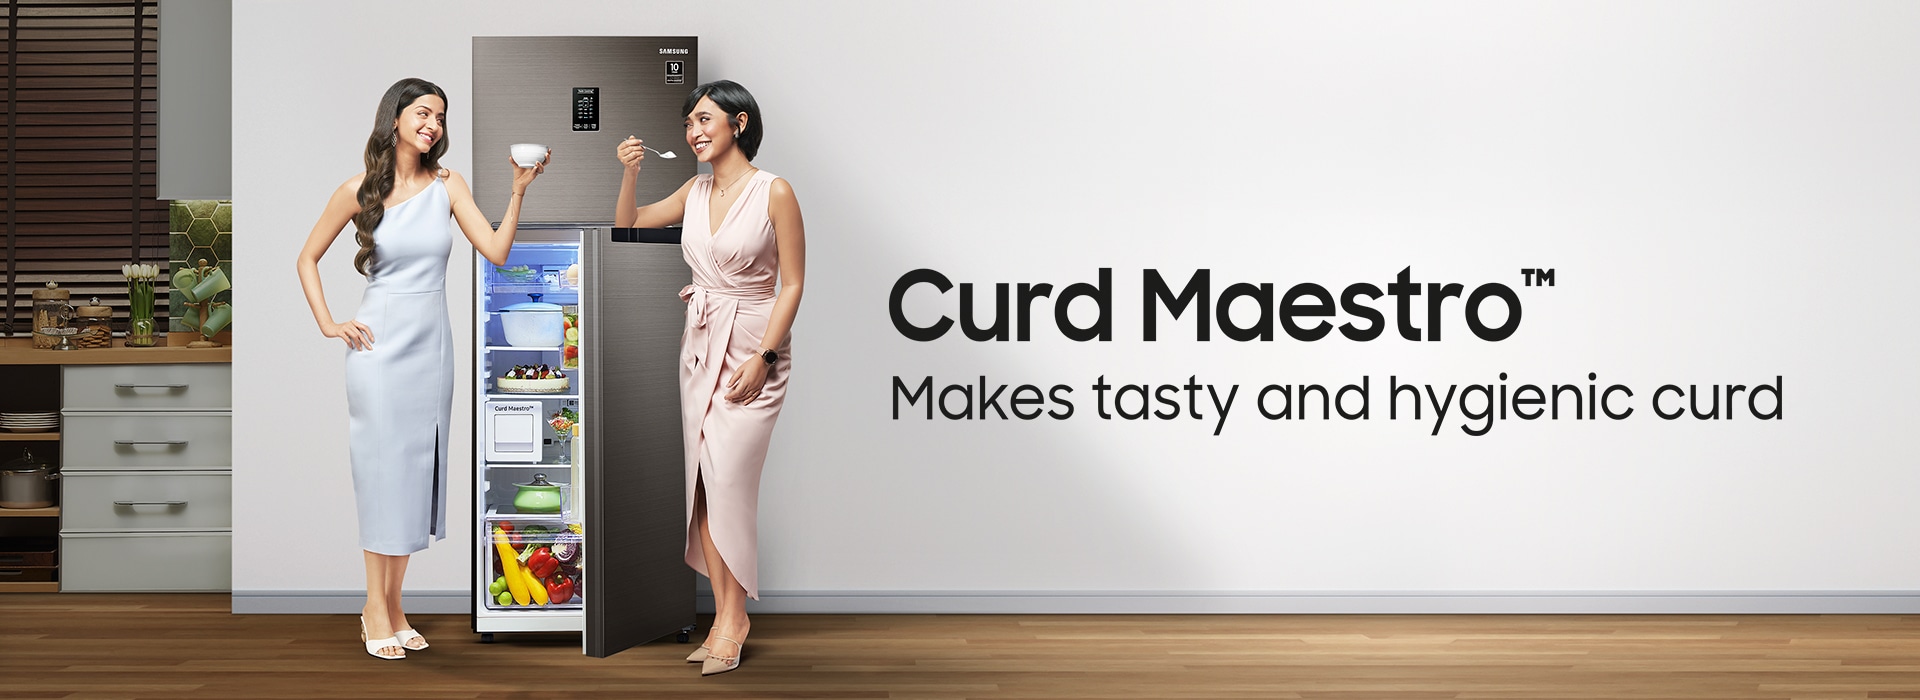 Curd Maestro™ Refrigerator